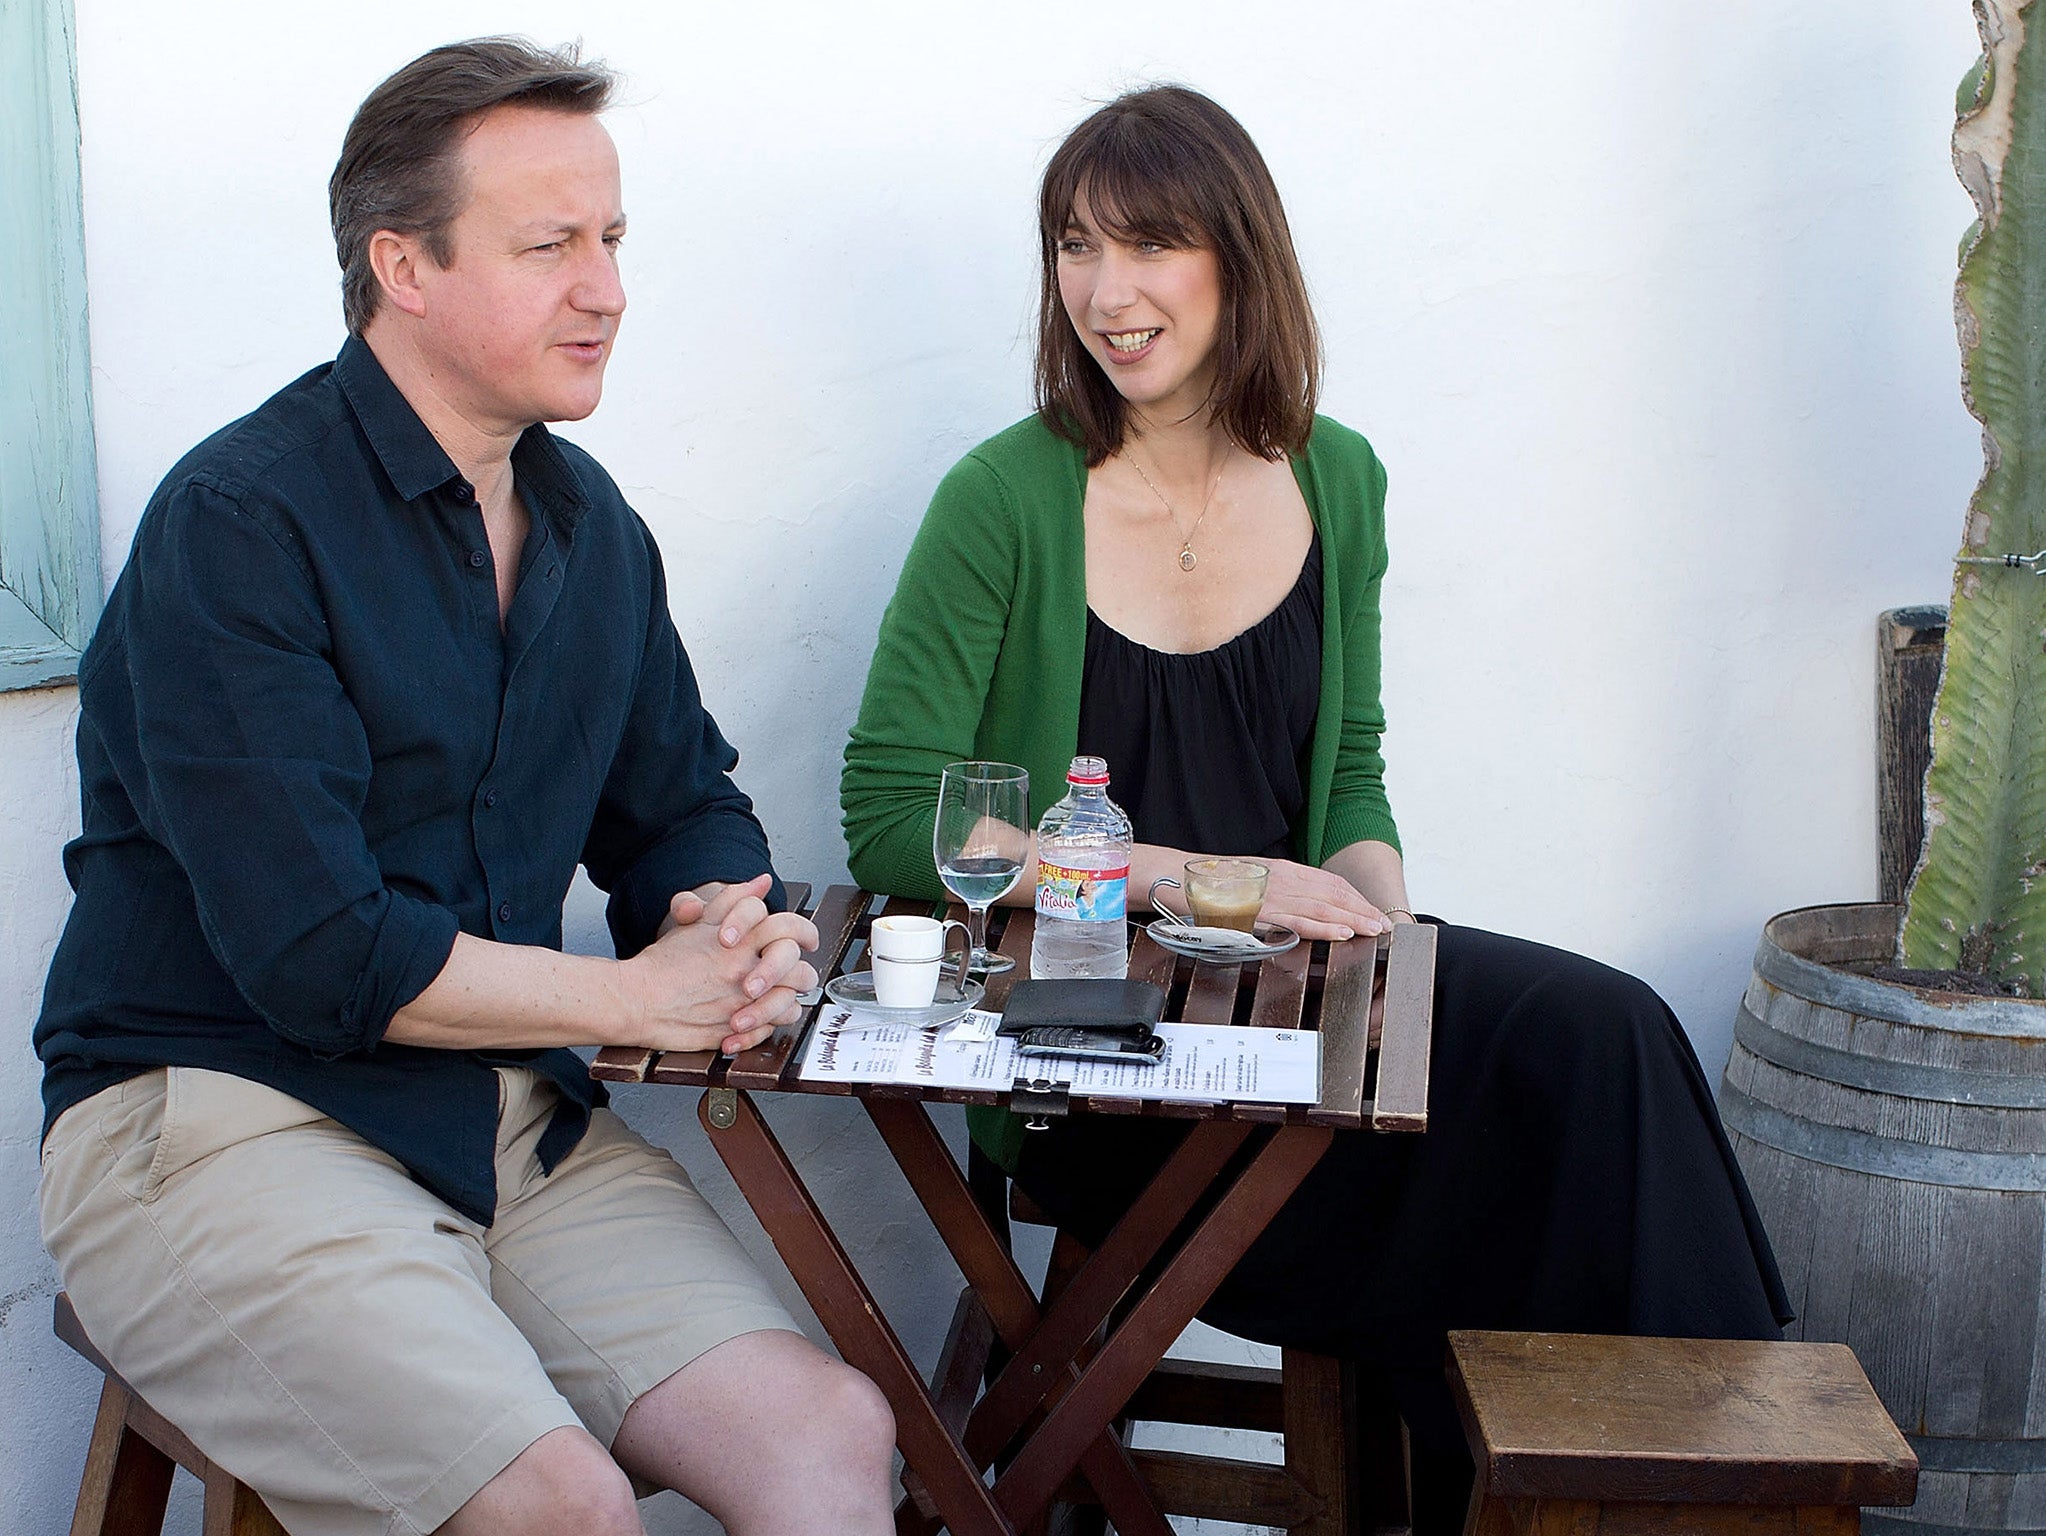 David Cameron and Samantha Cameron in Lanzarote in April 2014